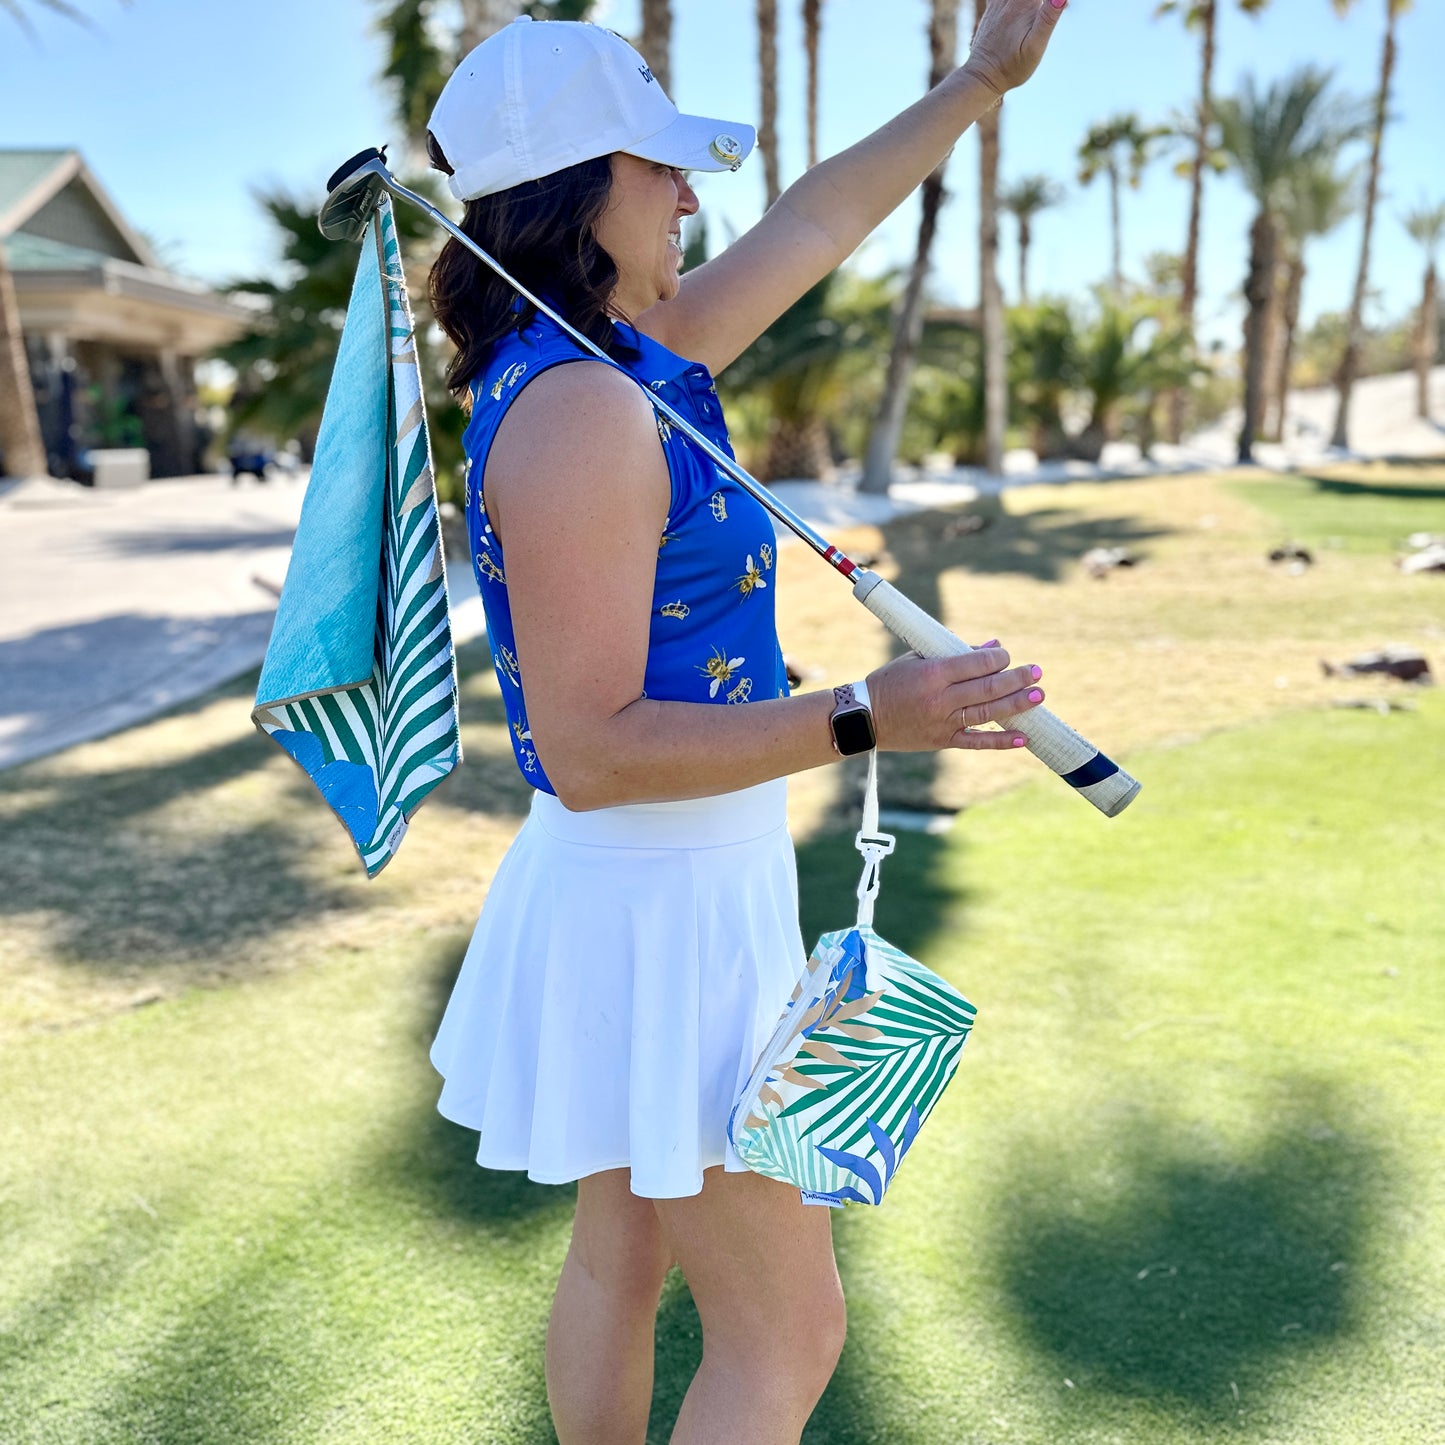 Girl's Trip Women's Golf Accessory Bag